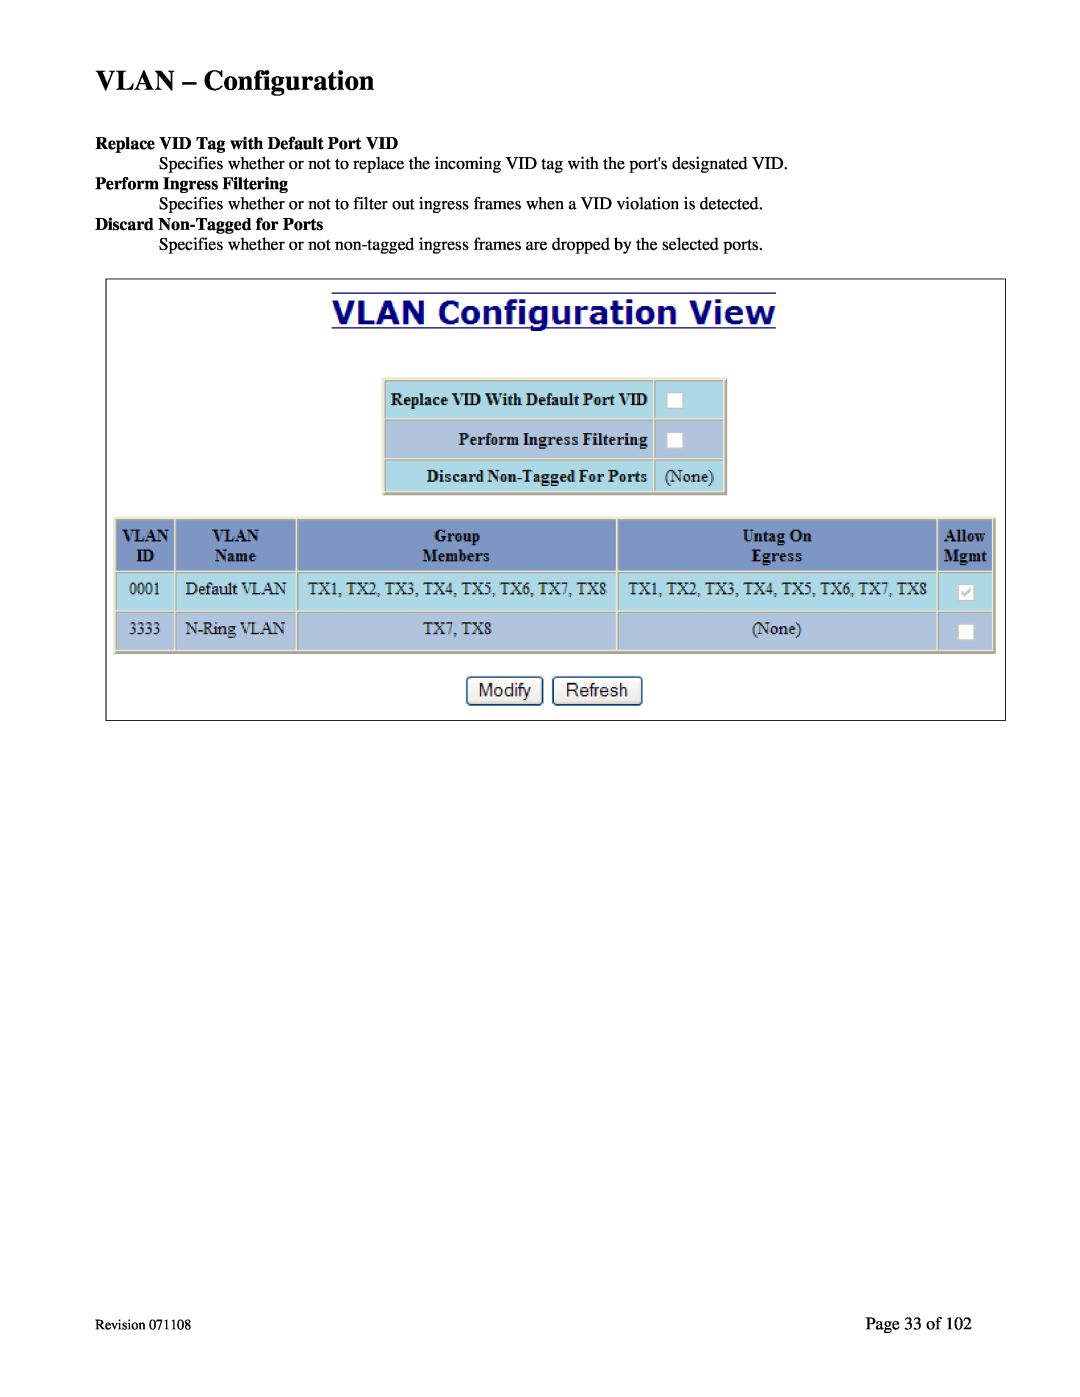 N-Tron 708M12 user manual VLAN - Configuration, Replace VID Tag with Default Port VID, Perform Ingress Filtering 